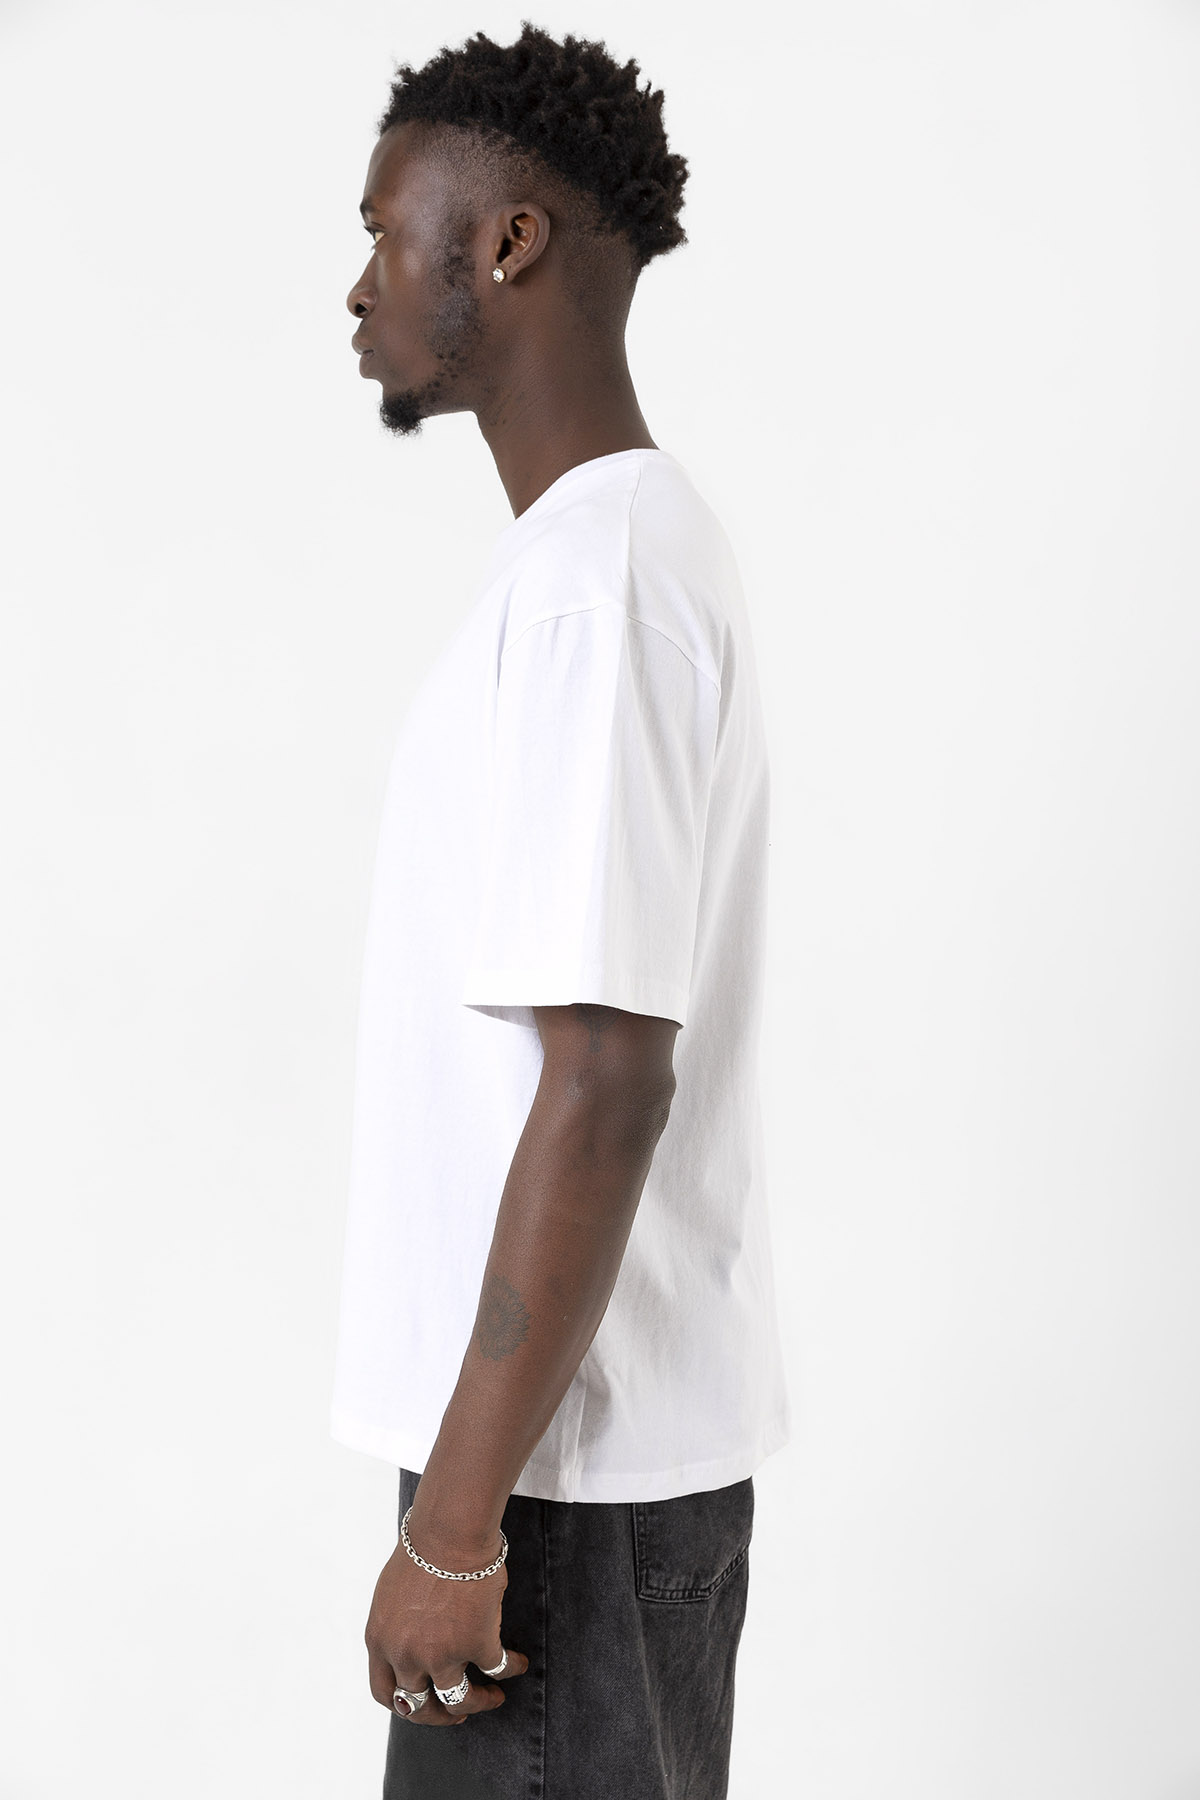 Neon Genesis Evangelion Seele Logo Beyaz Erkek Oversize Tshirt